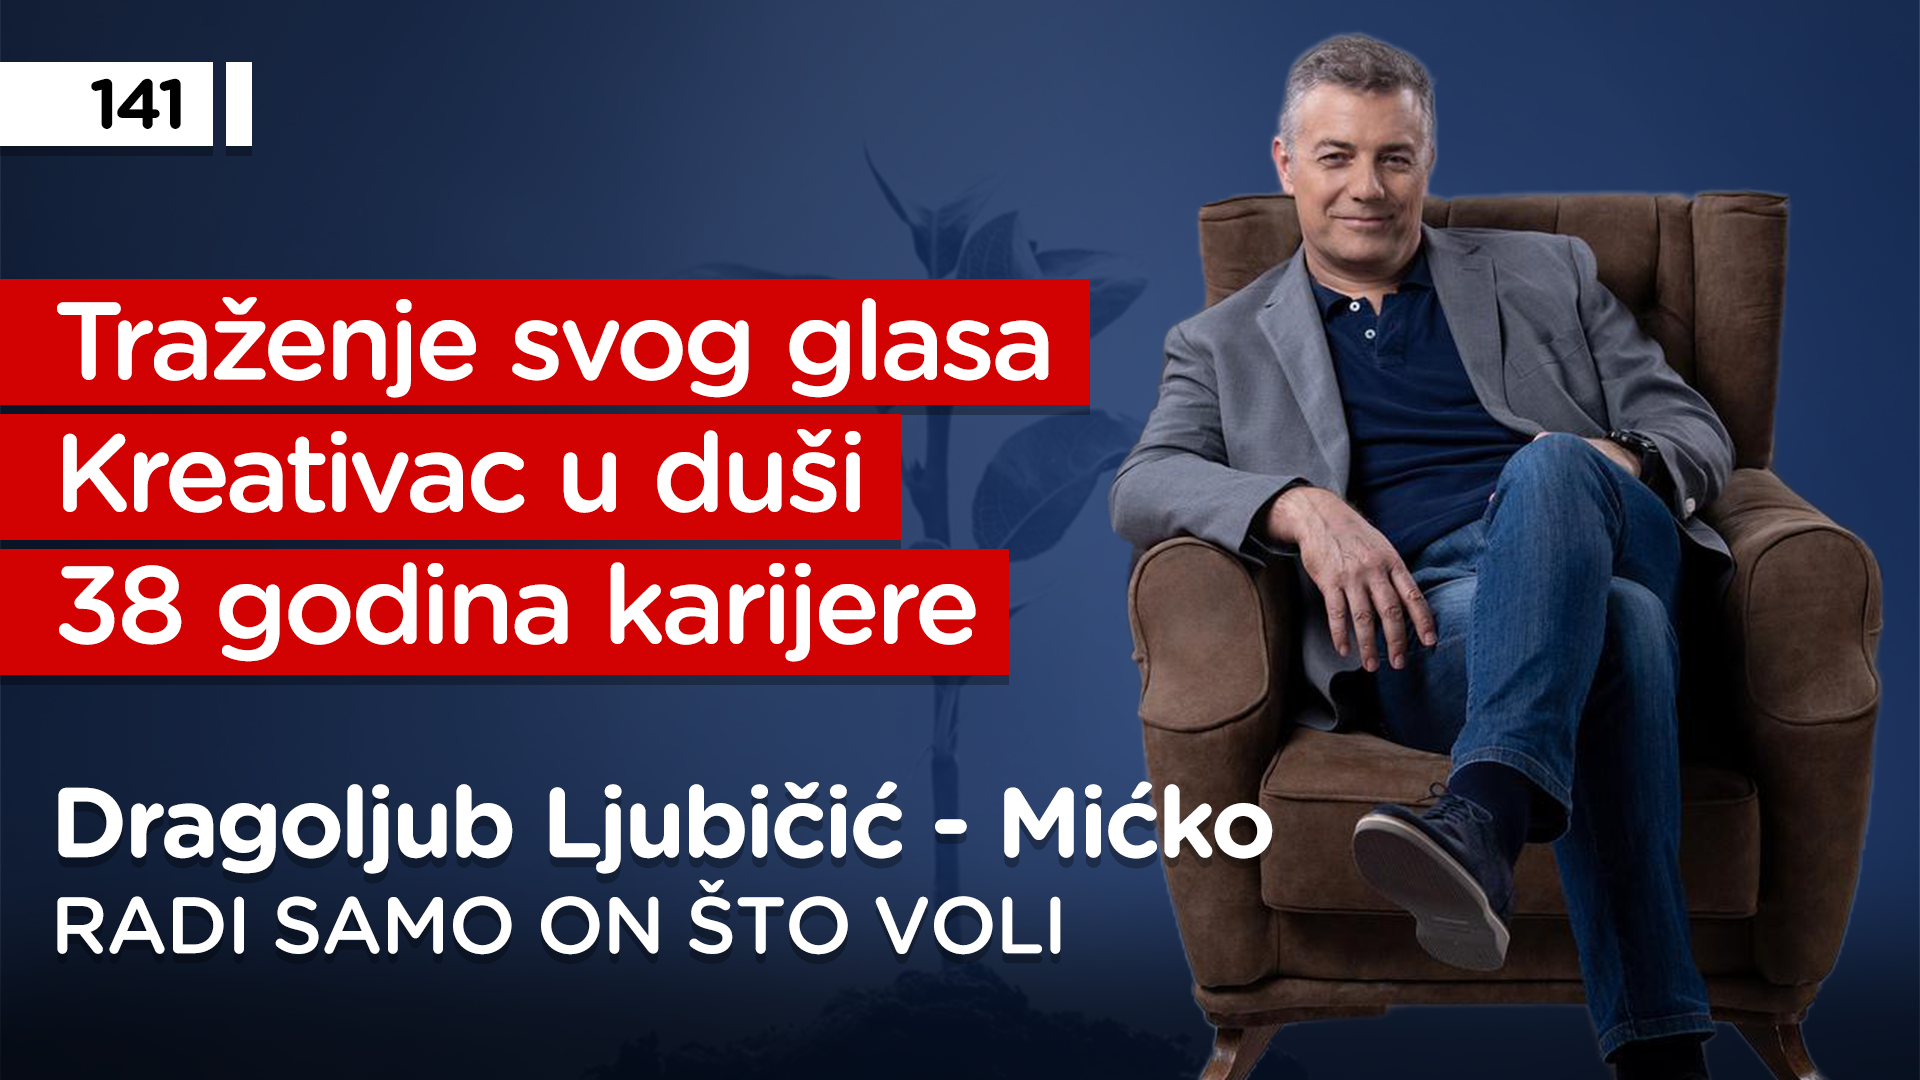 EP141: Dragoljub Mićko Ljubičić